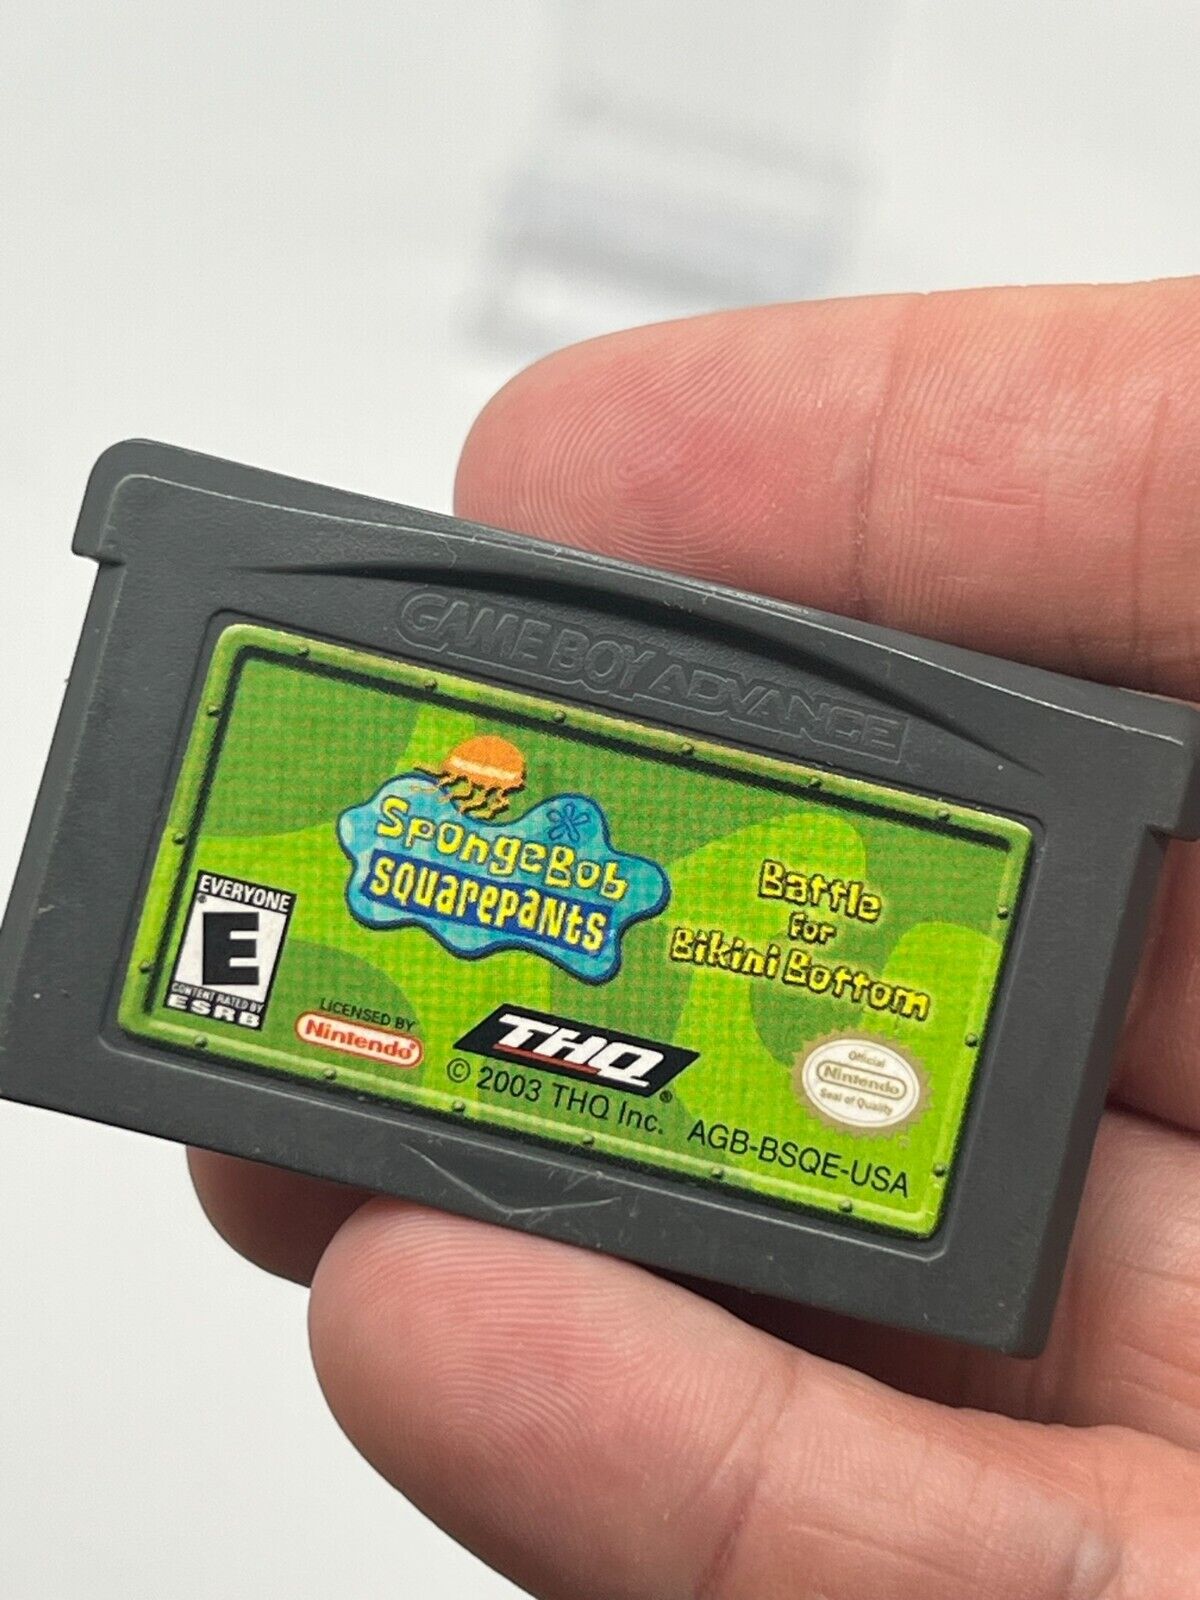 SpongeBob SquarePants: Battle for Bikini Bottom (Nintendo Game Boy Advance) GBA